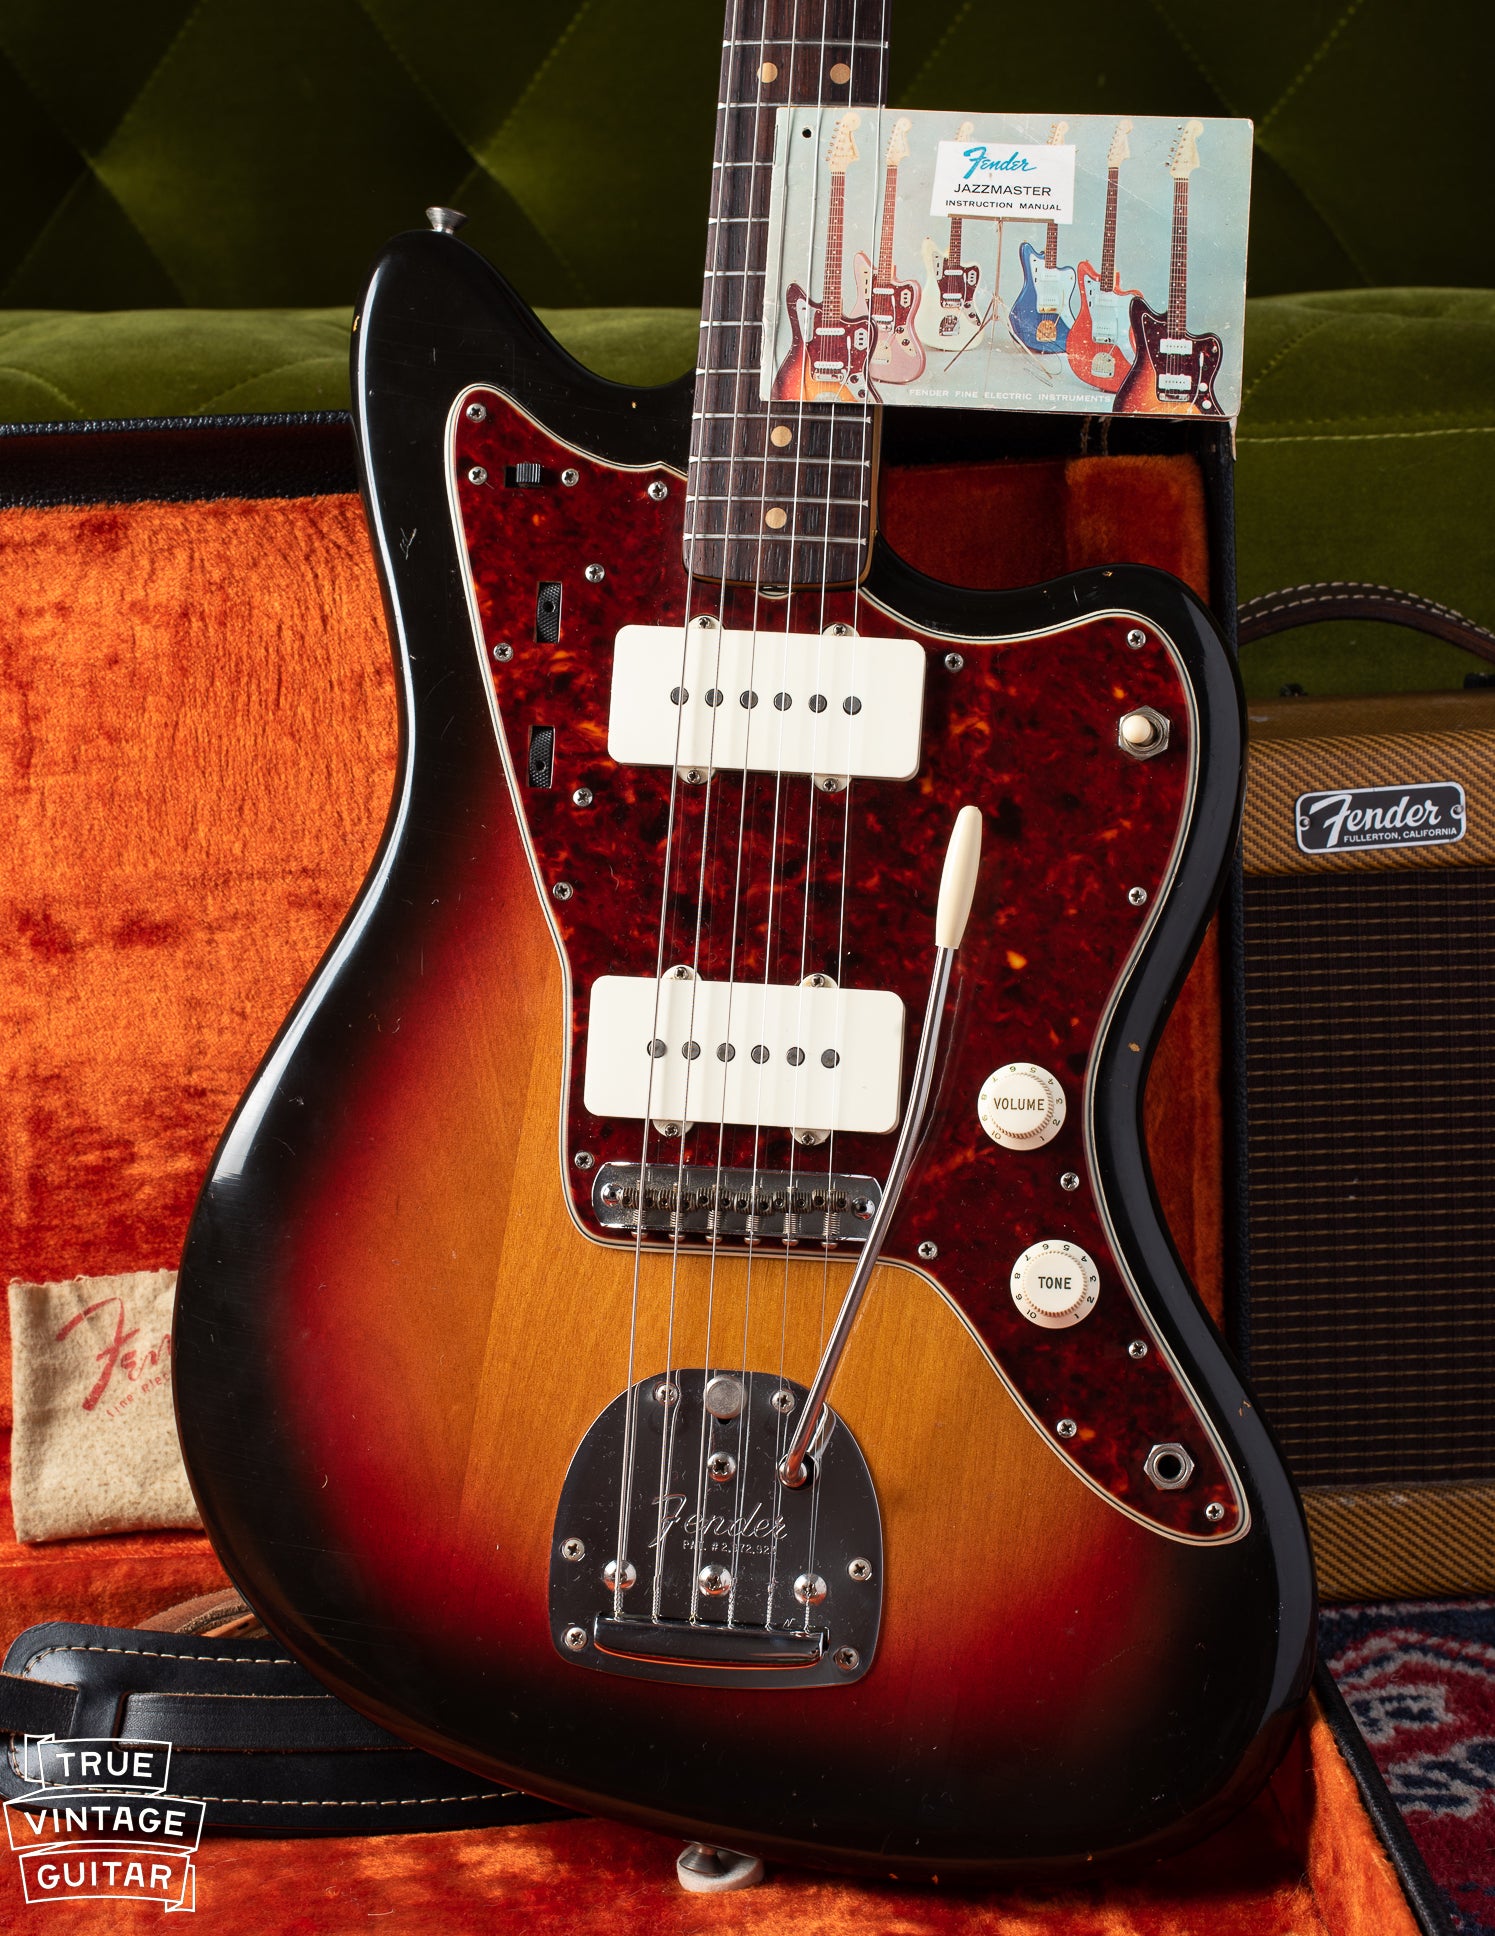 1964 Fender Jazzmaster guitar in original case with hang tag